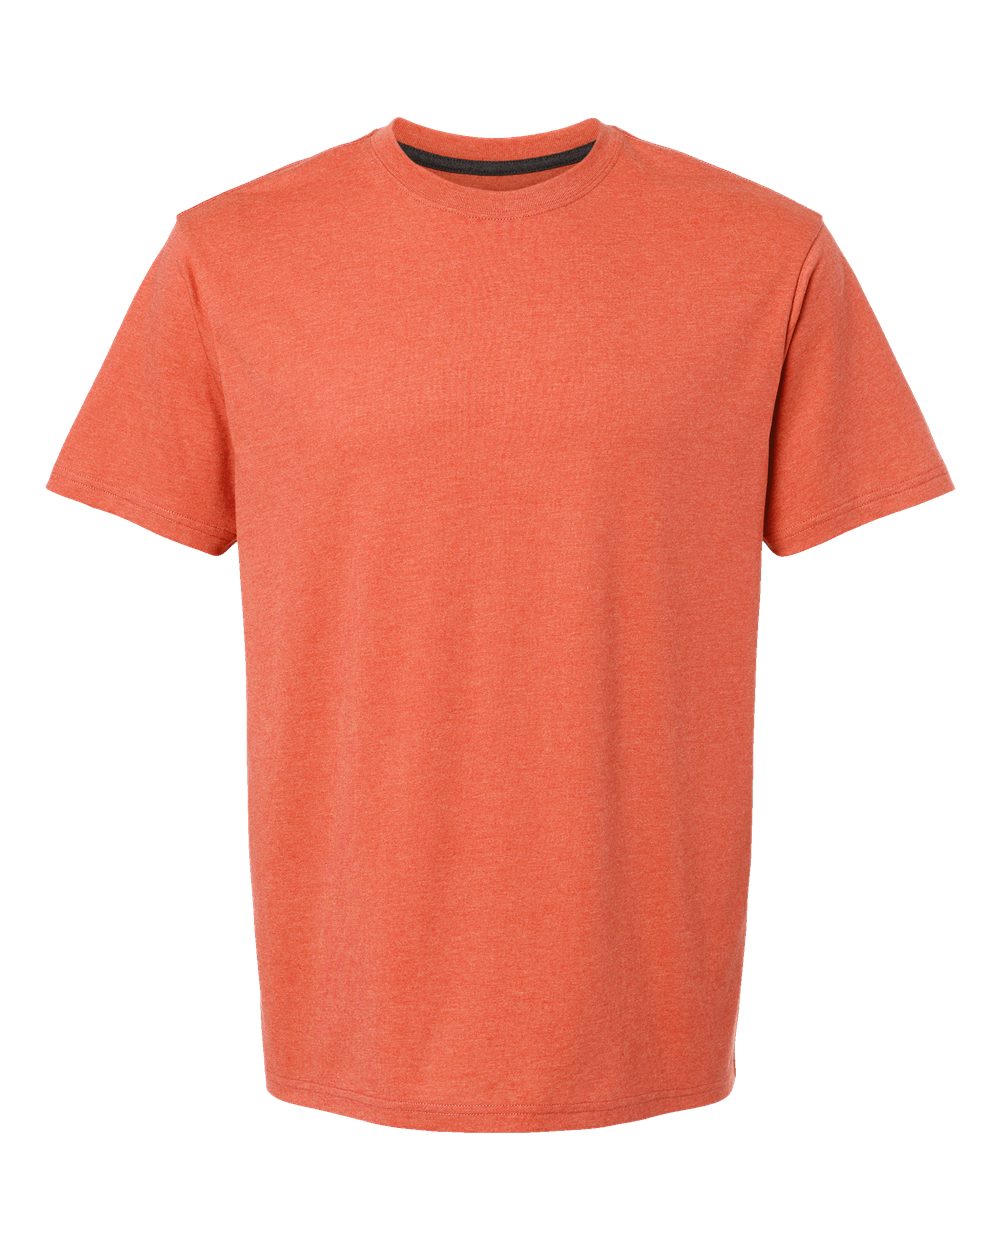 Customizable kastlfel recycledsoft t-shirt in orange